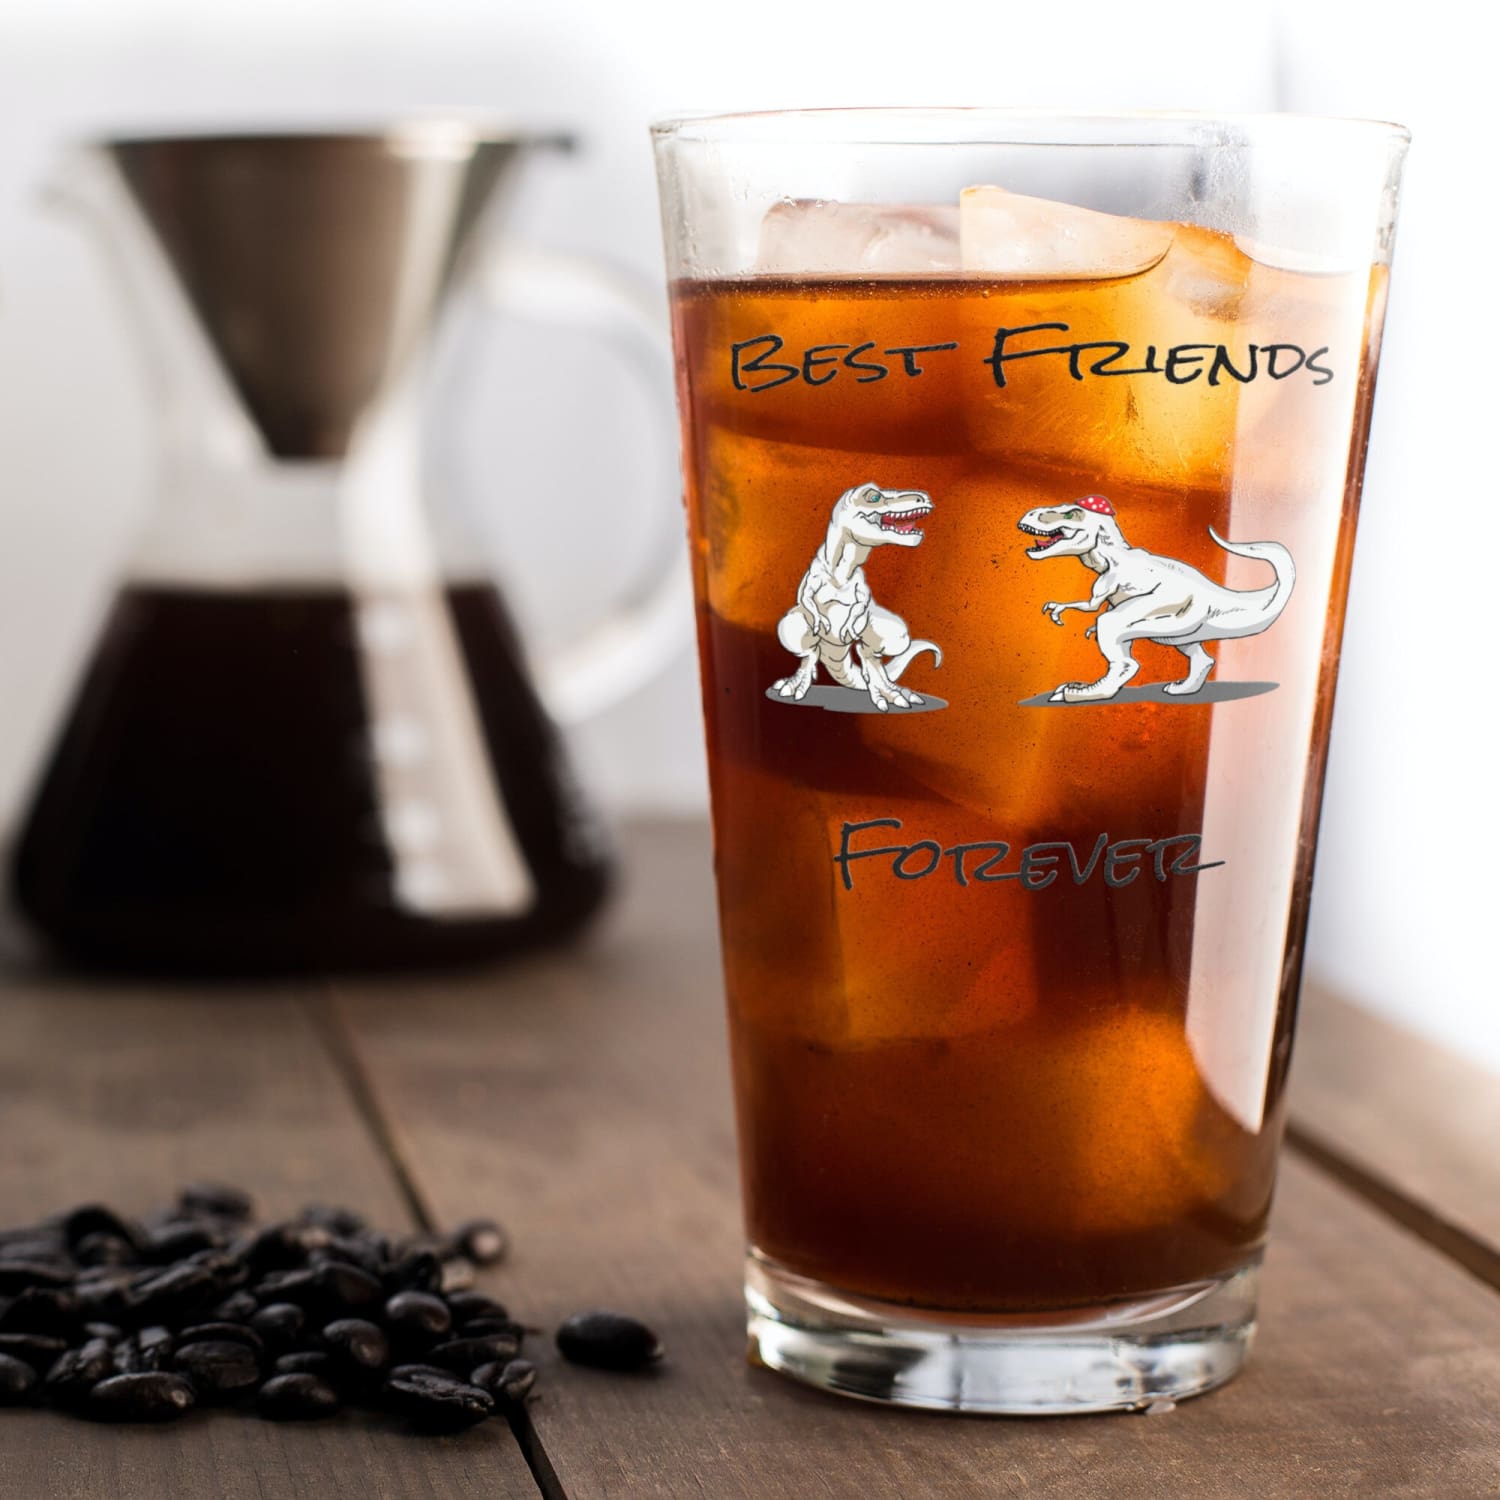 T-Rex Best Friends Forever 16oz Pint Glass - Drinkware